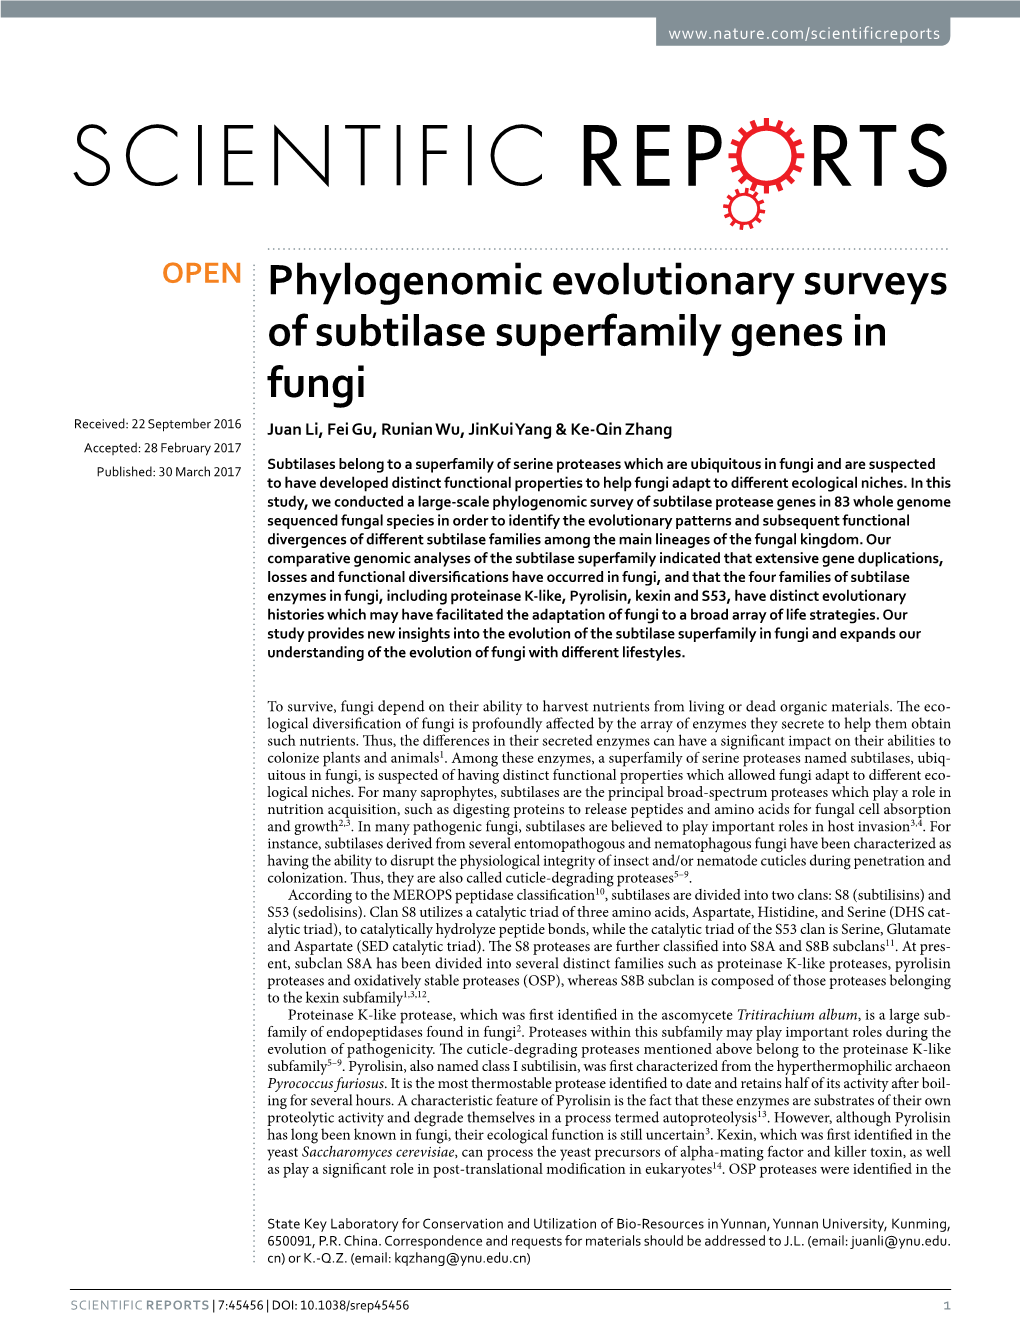 Phylogenomic Evolutionary Surveys of Subtilase Superfamily Genes in Fungi